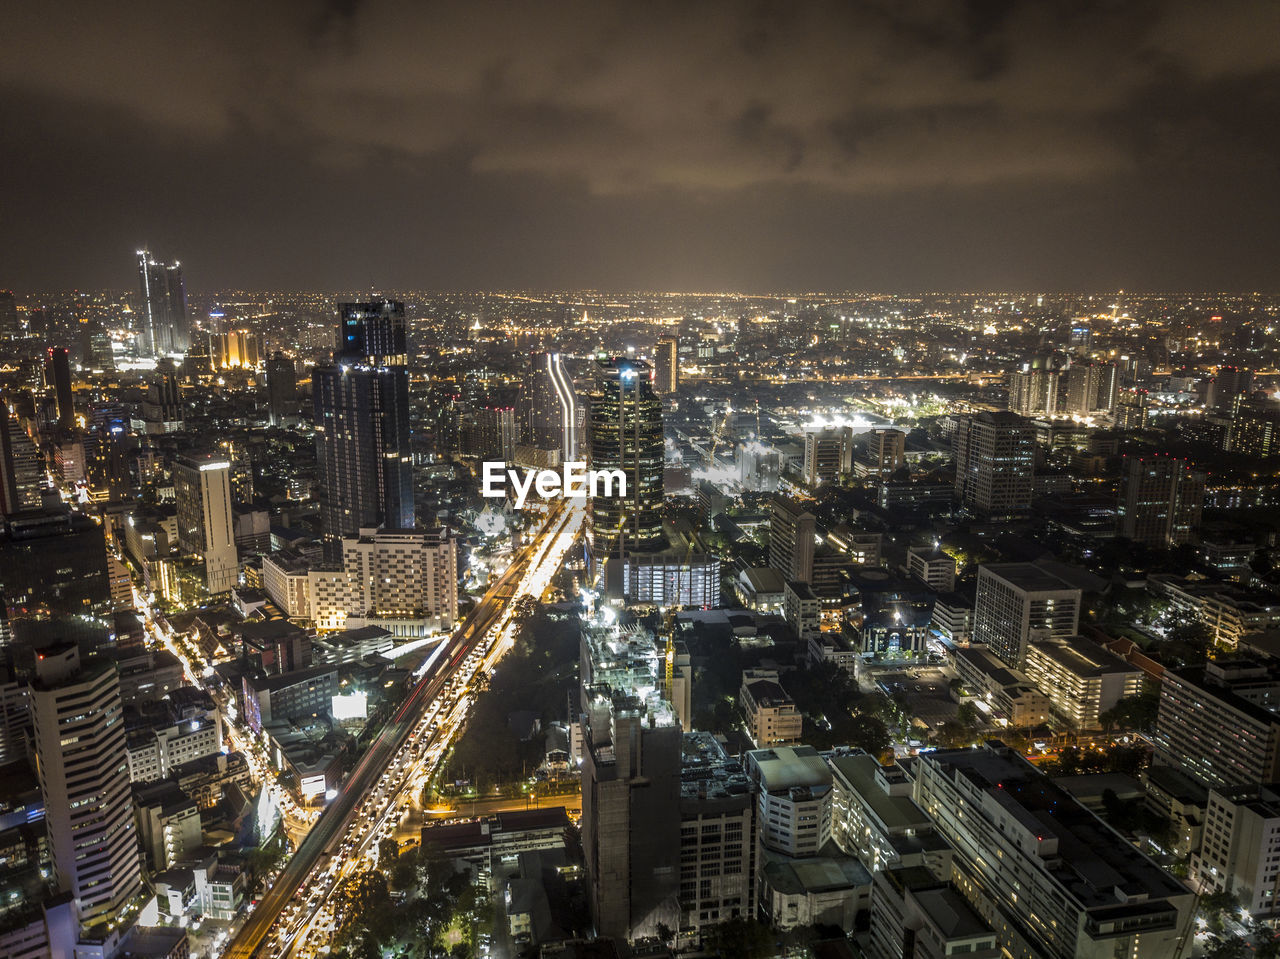 Drone aerial photograph of bangkok, capital city of thailand.